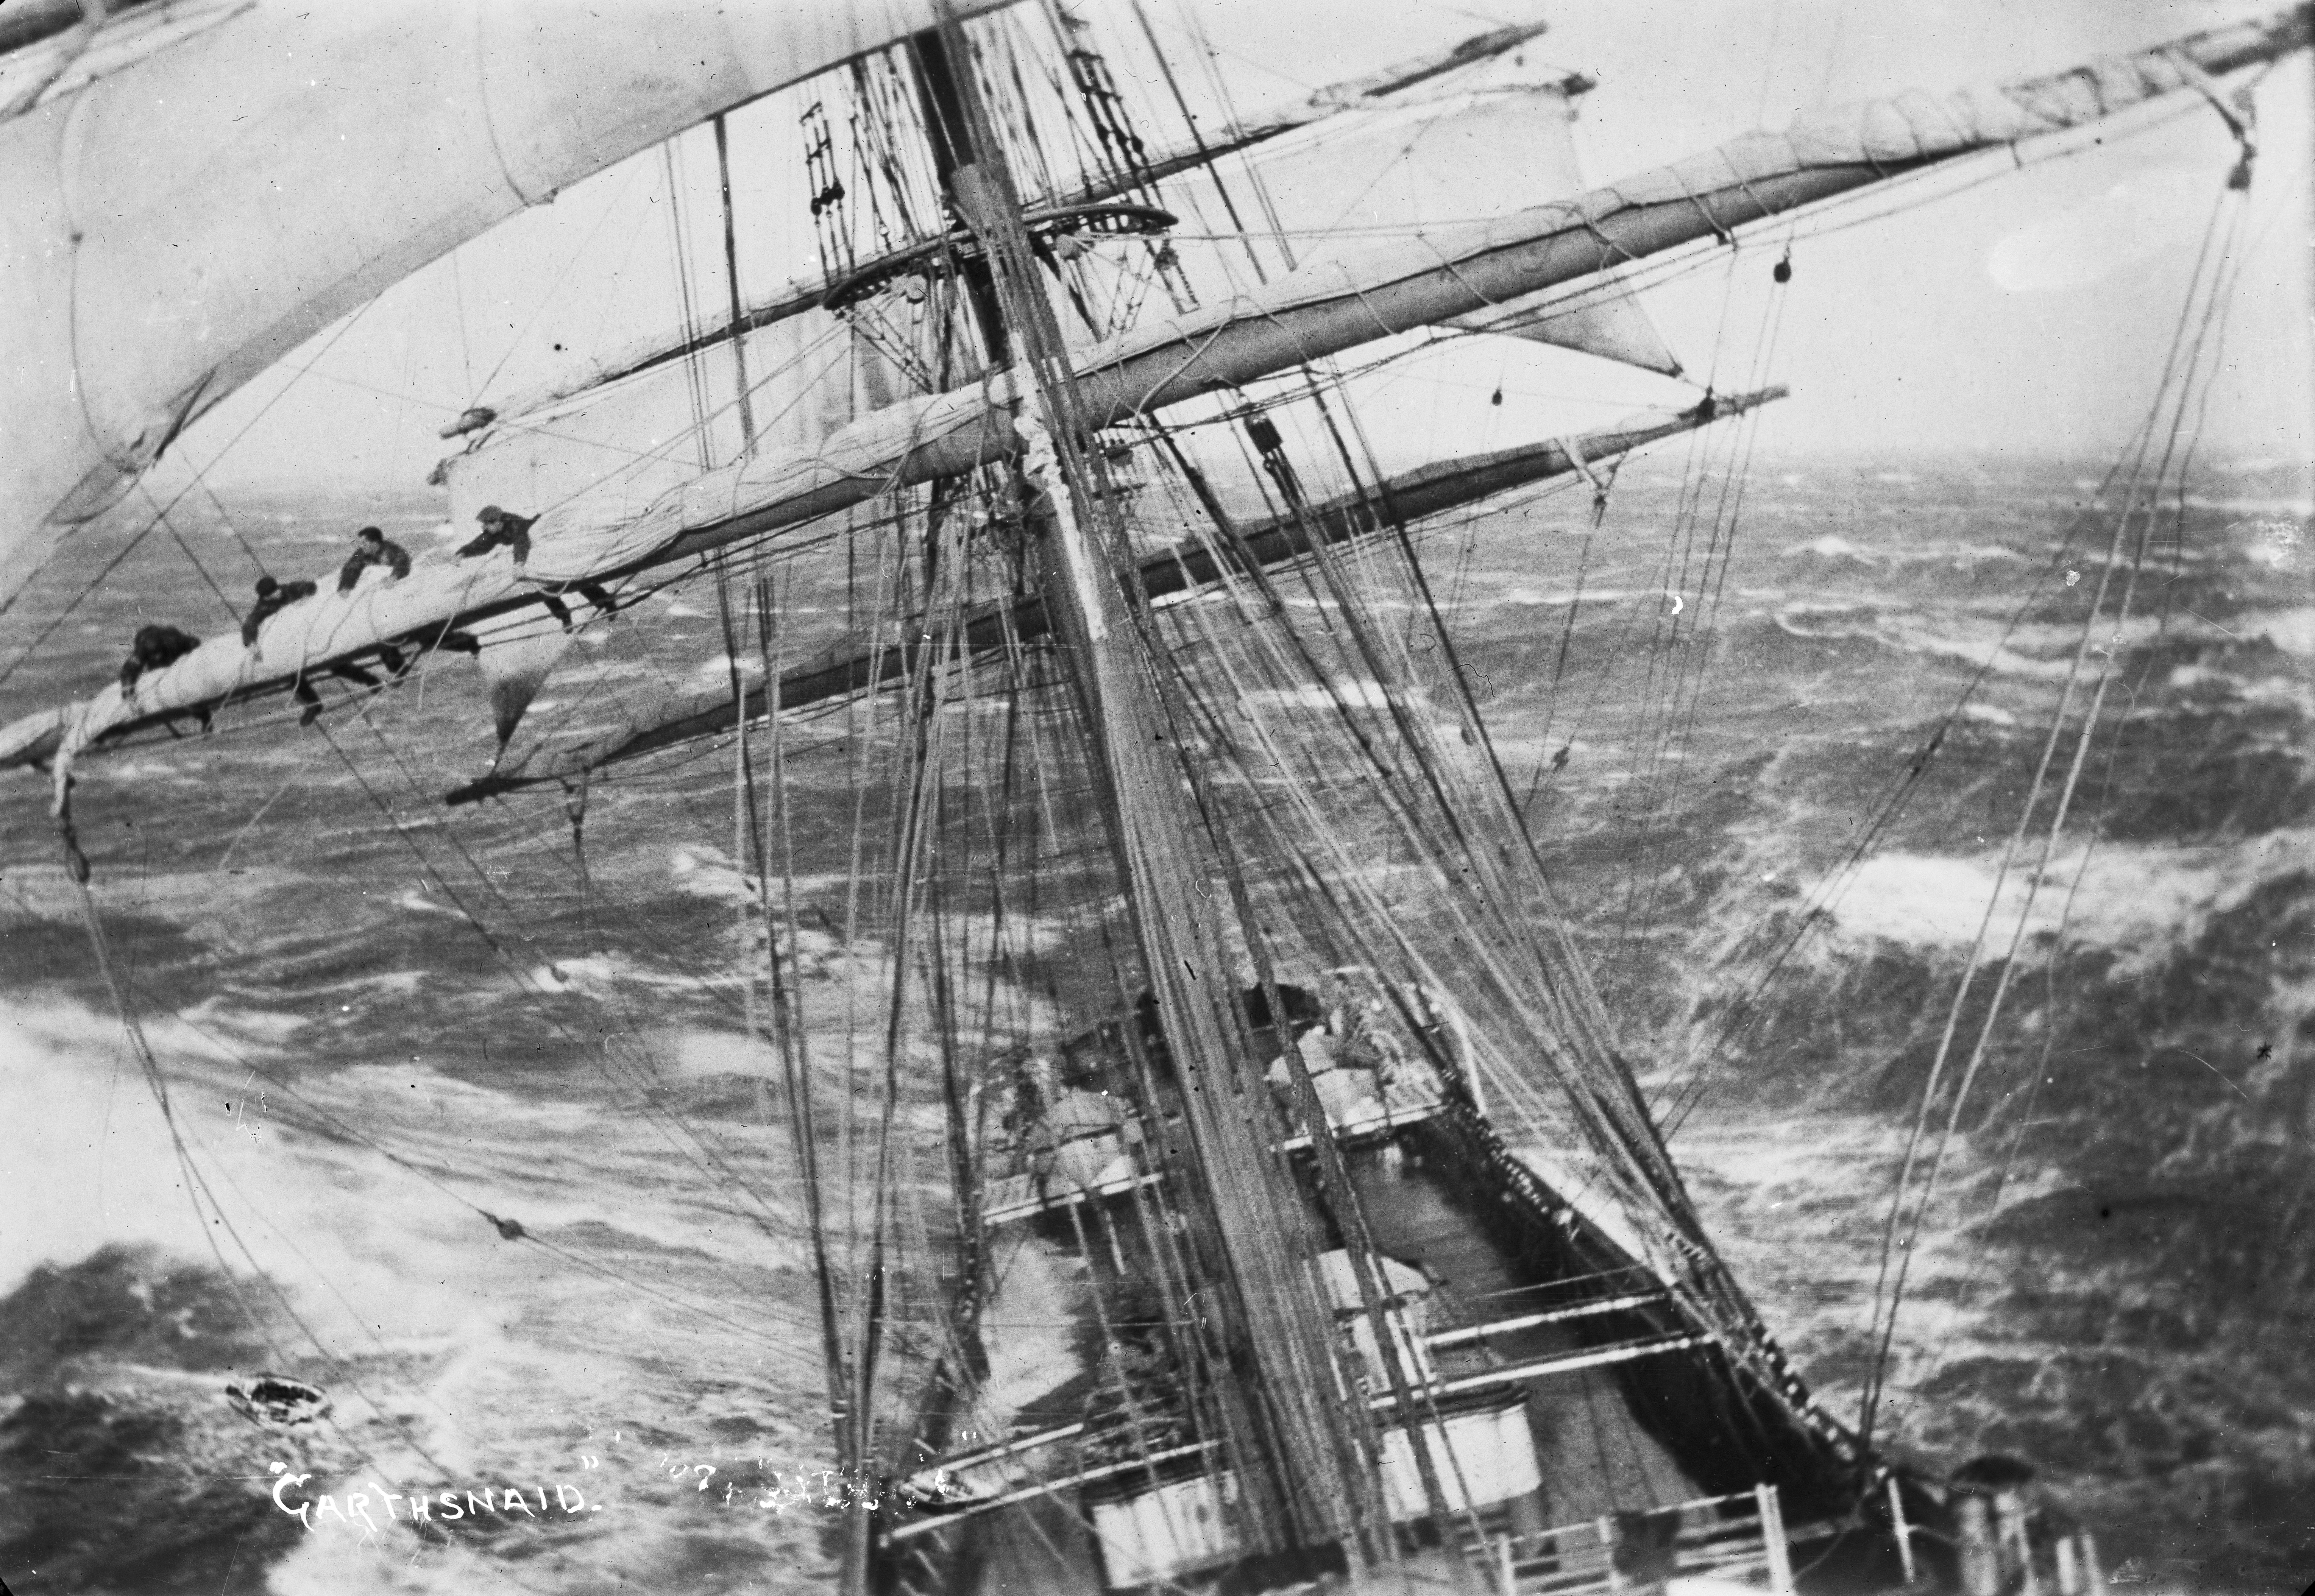 Ship_Garthsnaid,_ca_1920s